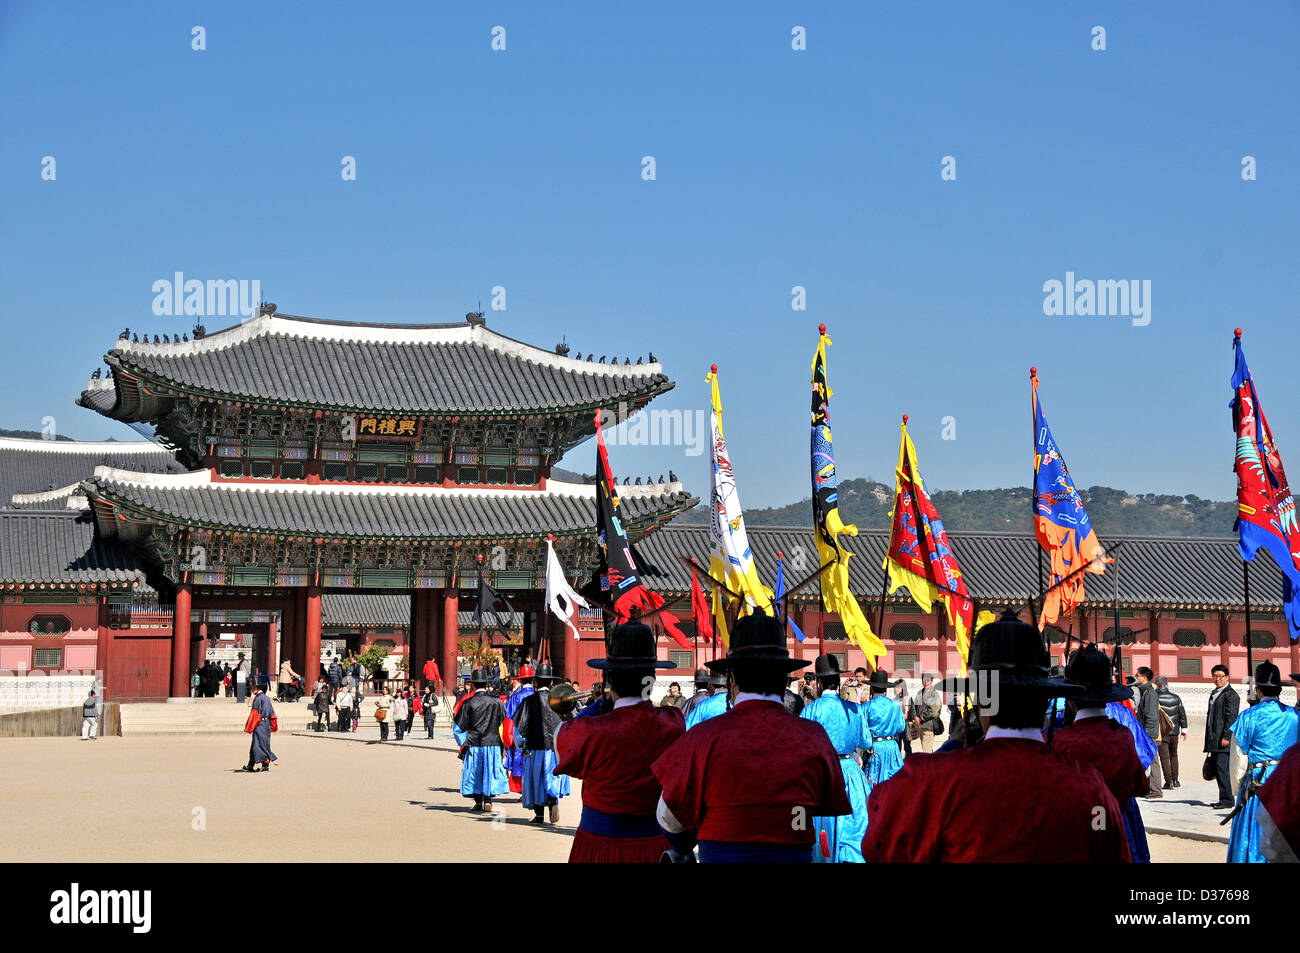 changing the guards parade Gyeongbokgung palace Seoul South Korea Asia Stock Photo